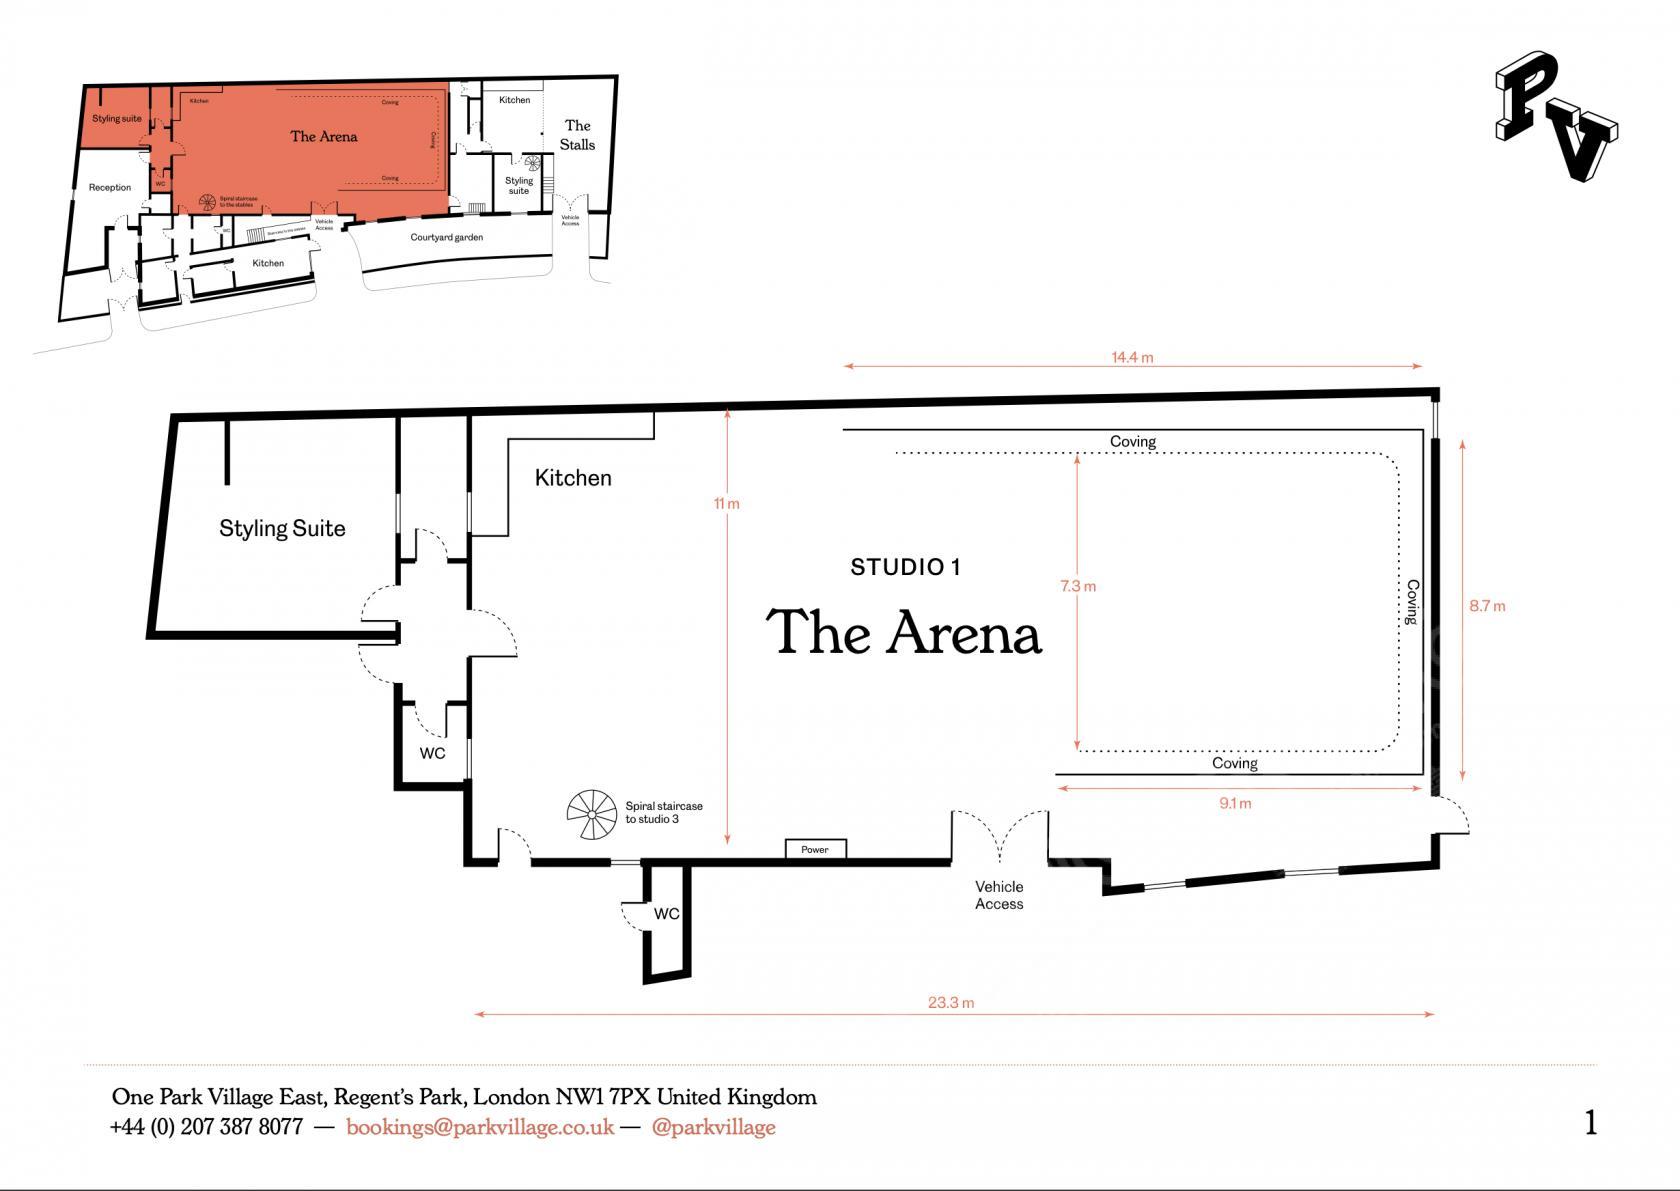 The Arena (Studio 1)